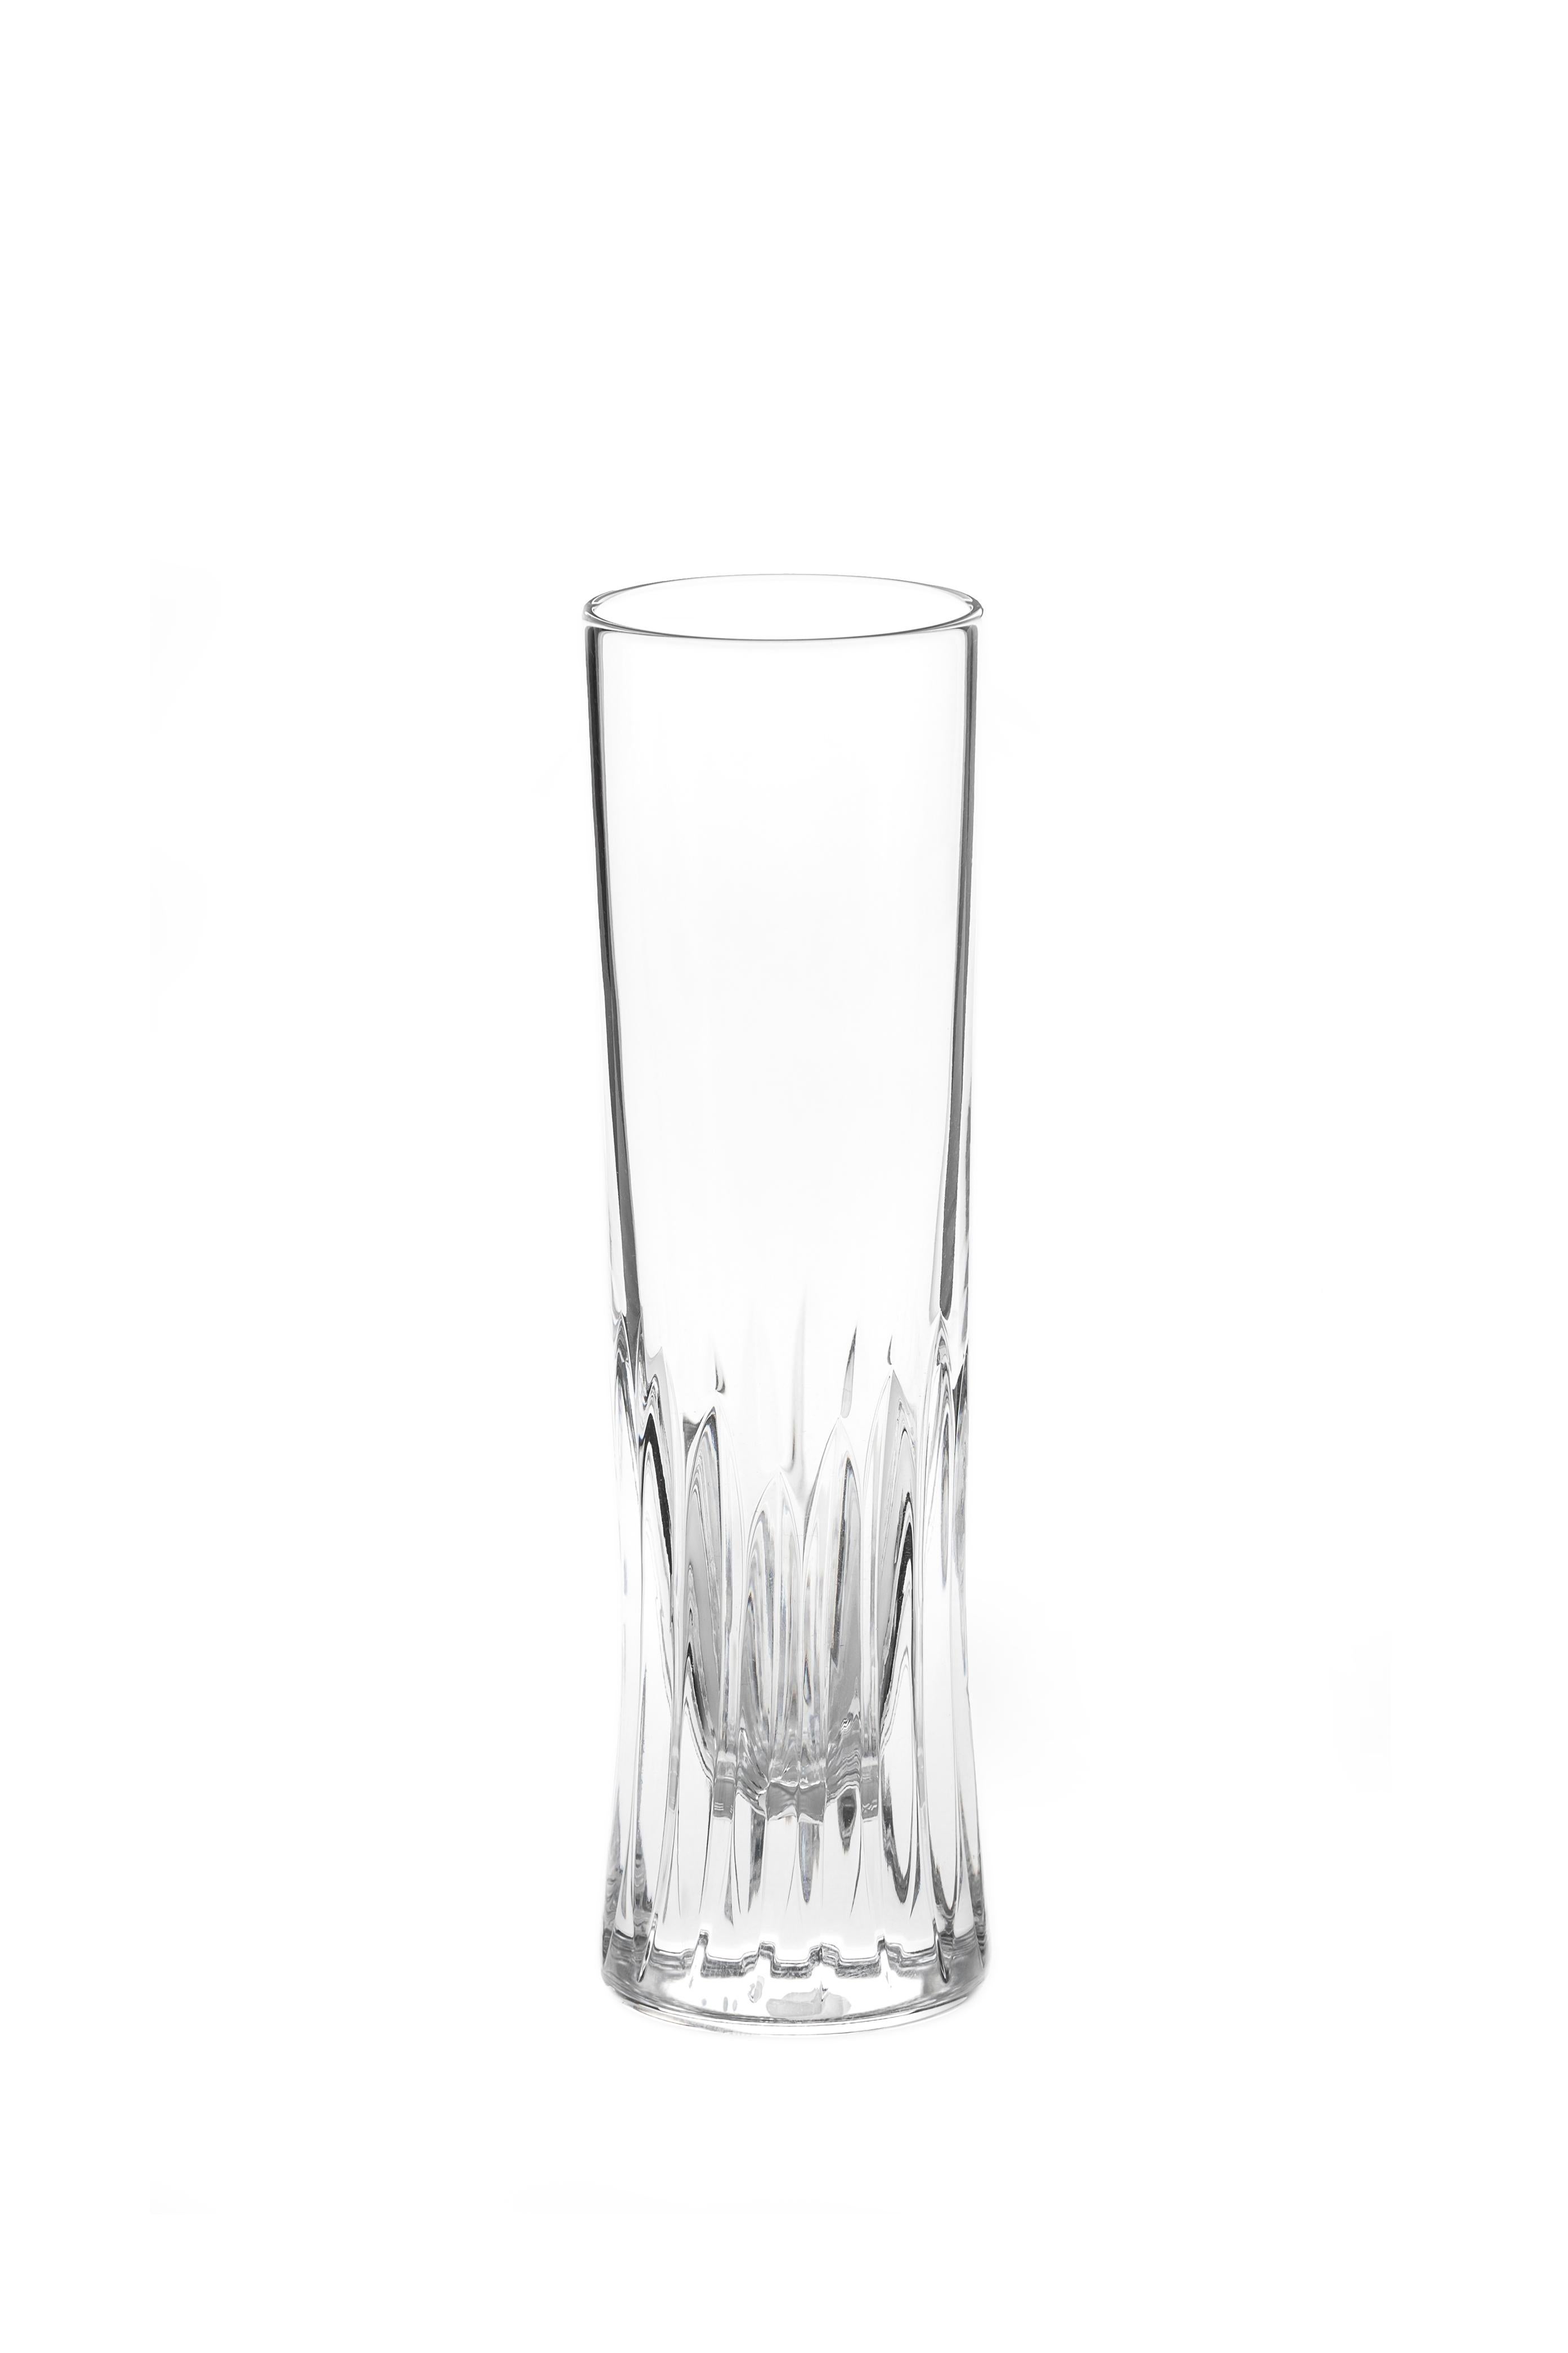 Cut Glass Martino Gamper Handmade Irish Crystal Champagne Glass 'Cuttings' Series x 2 For Sale